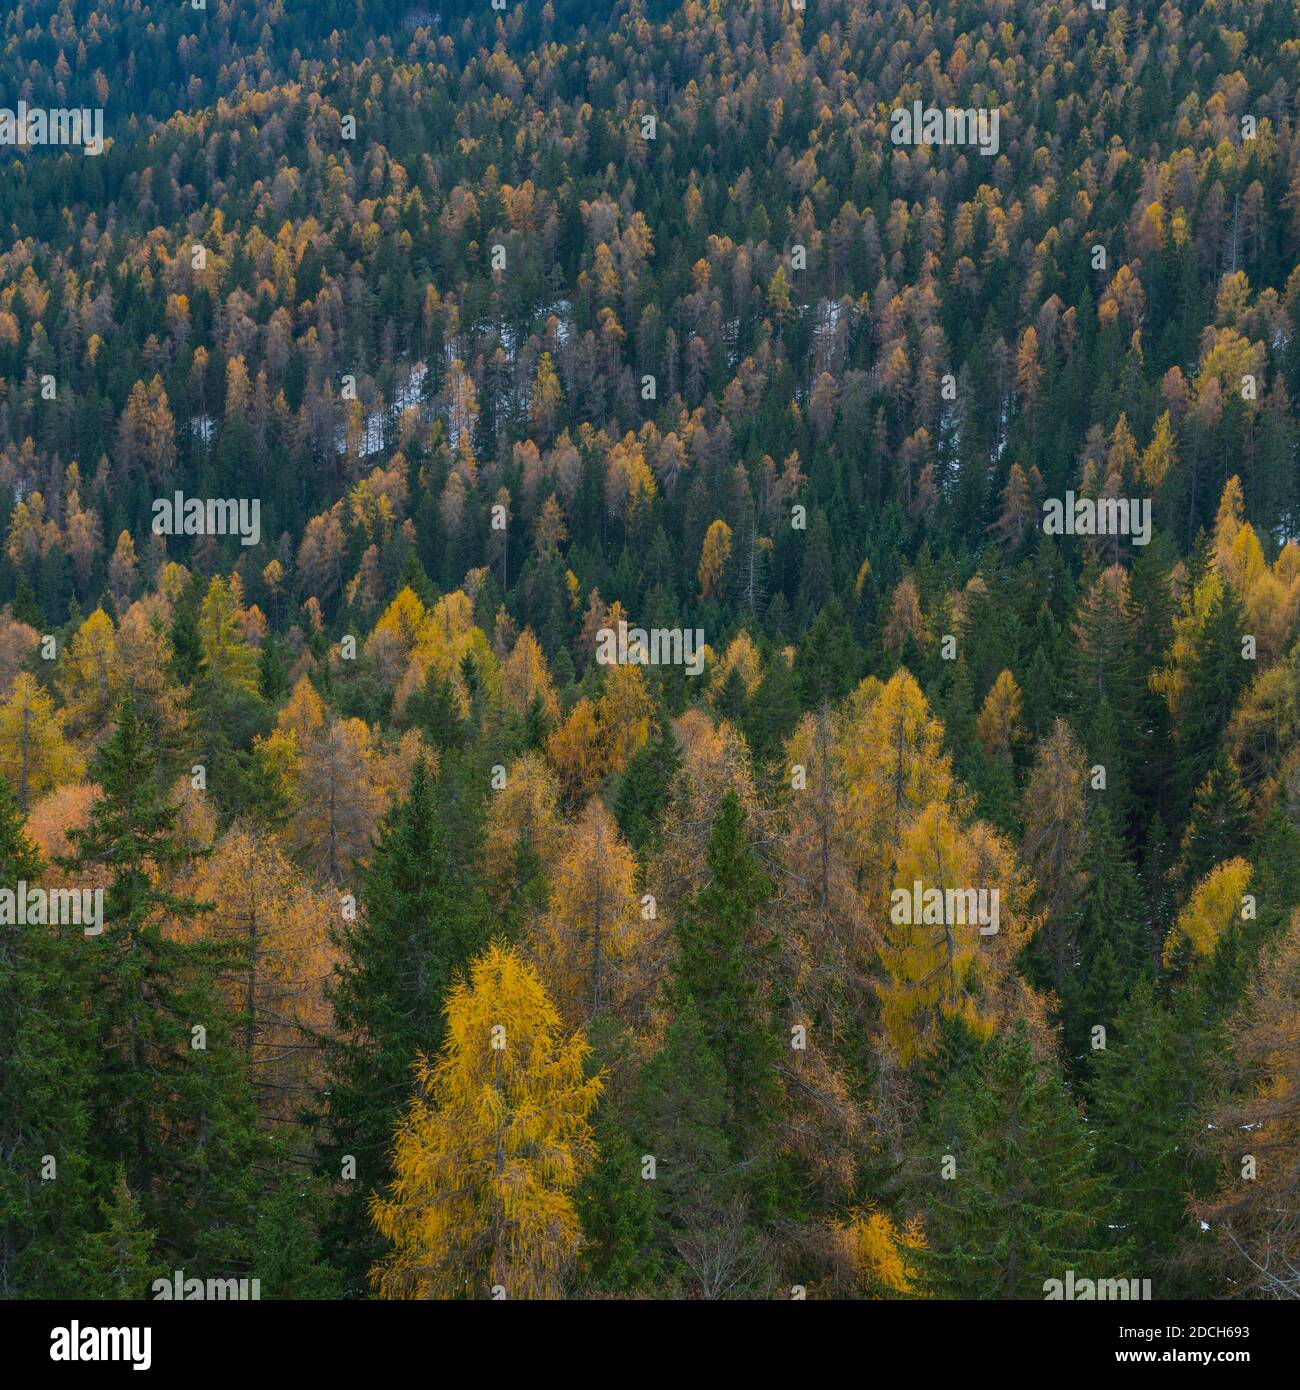 European Larch forest, Cortina D'Ampezzo, Belluno province, Dolomites, Unesco World Heritage Site, Italy, Europe Stock Photo